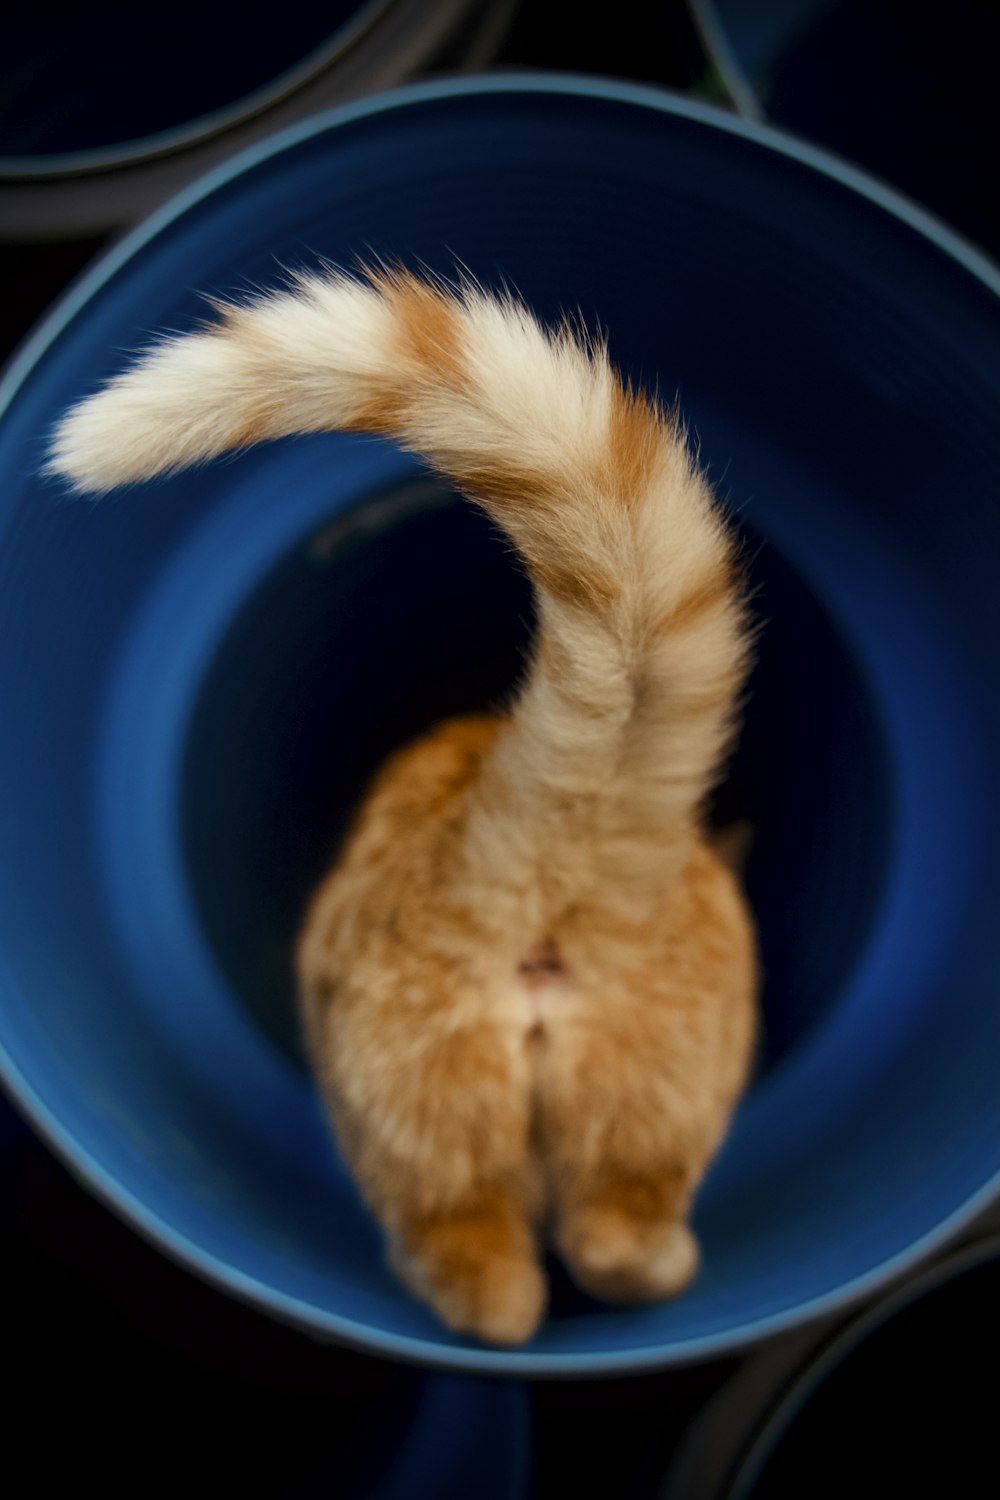 Orange Tabby Katze im blauen Plastikeimer